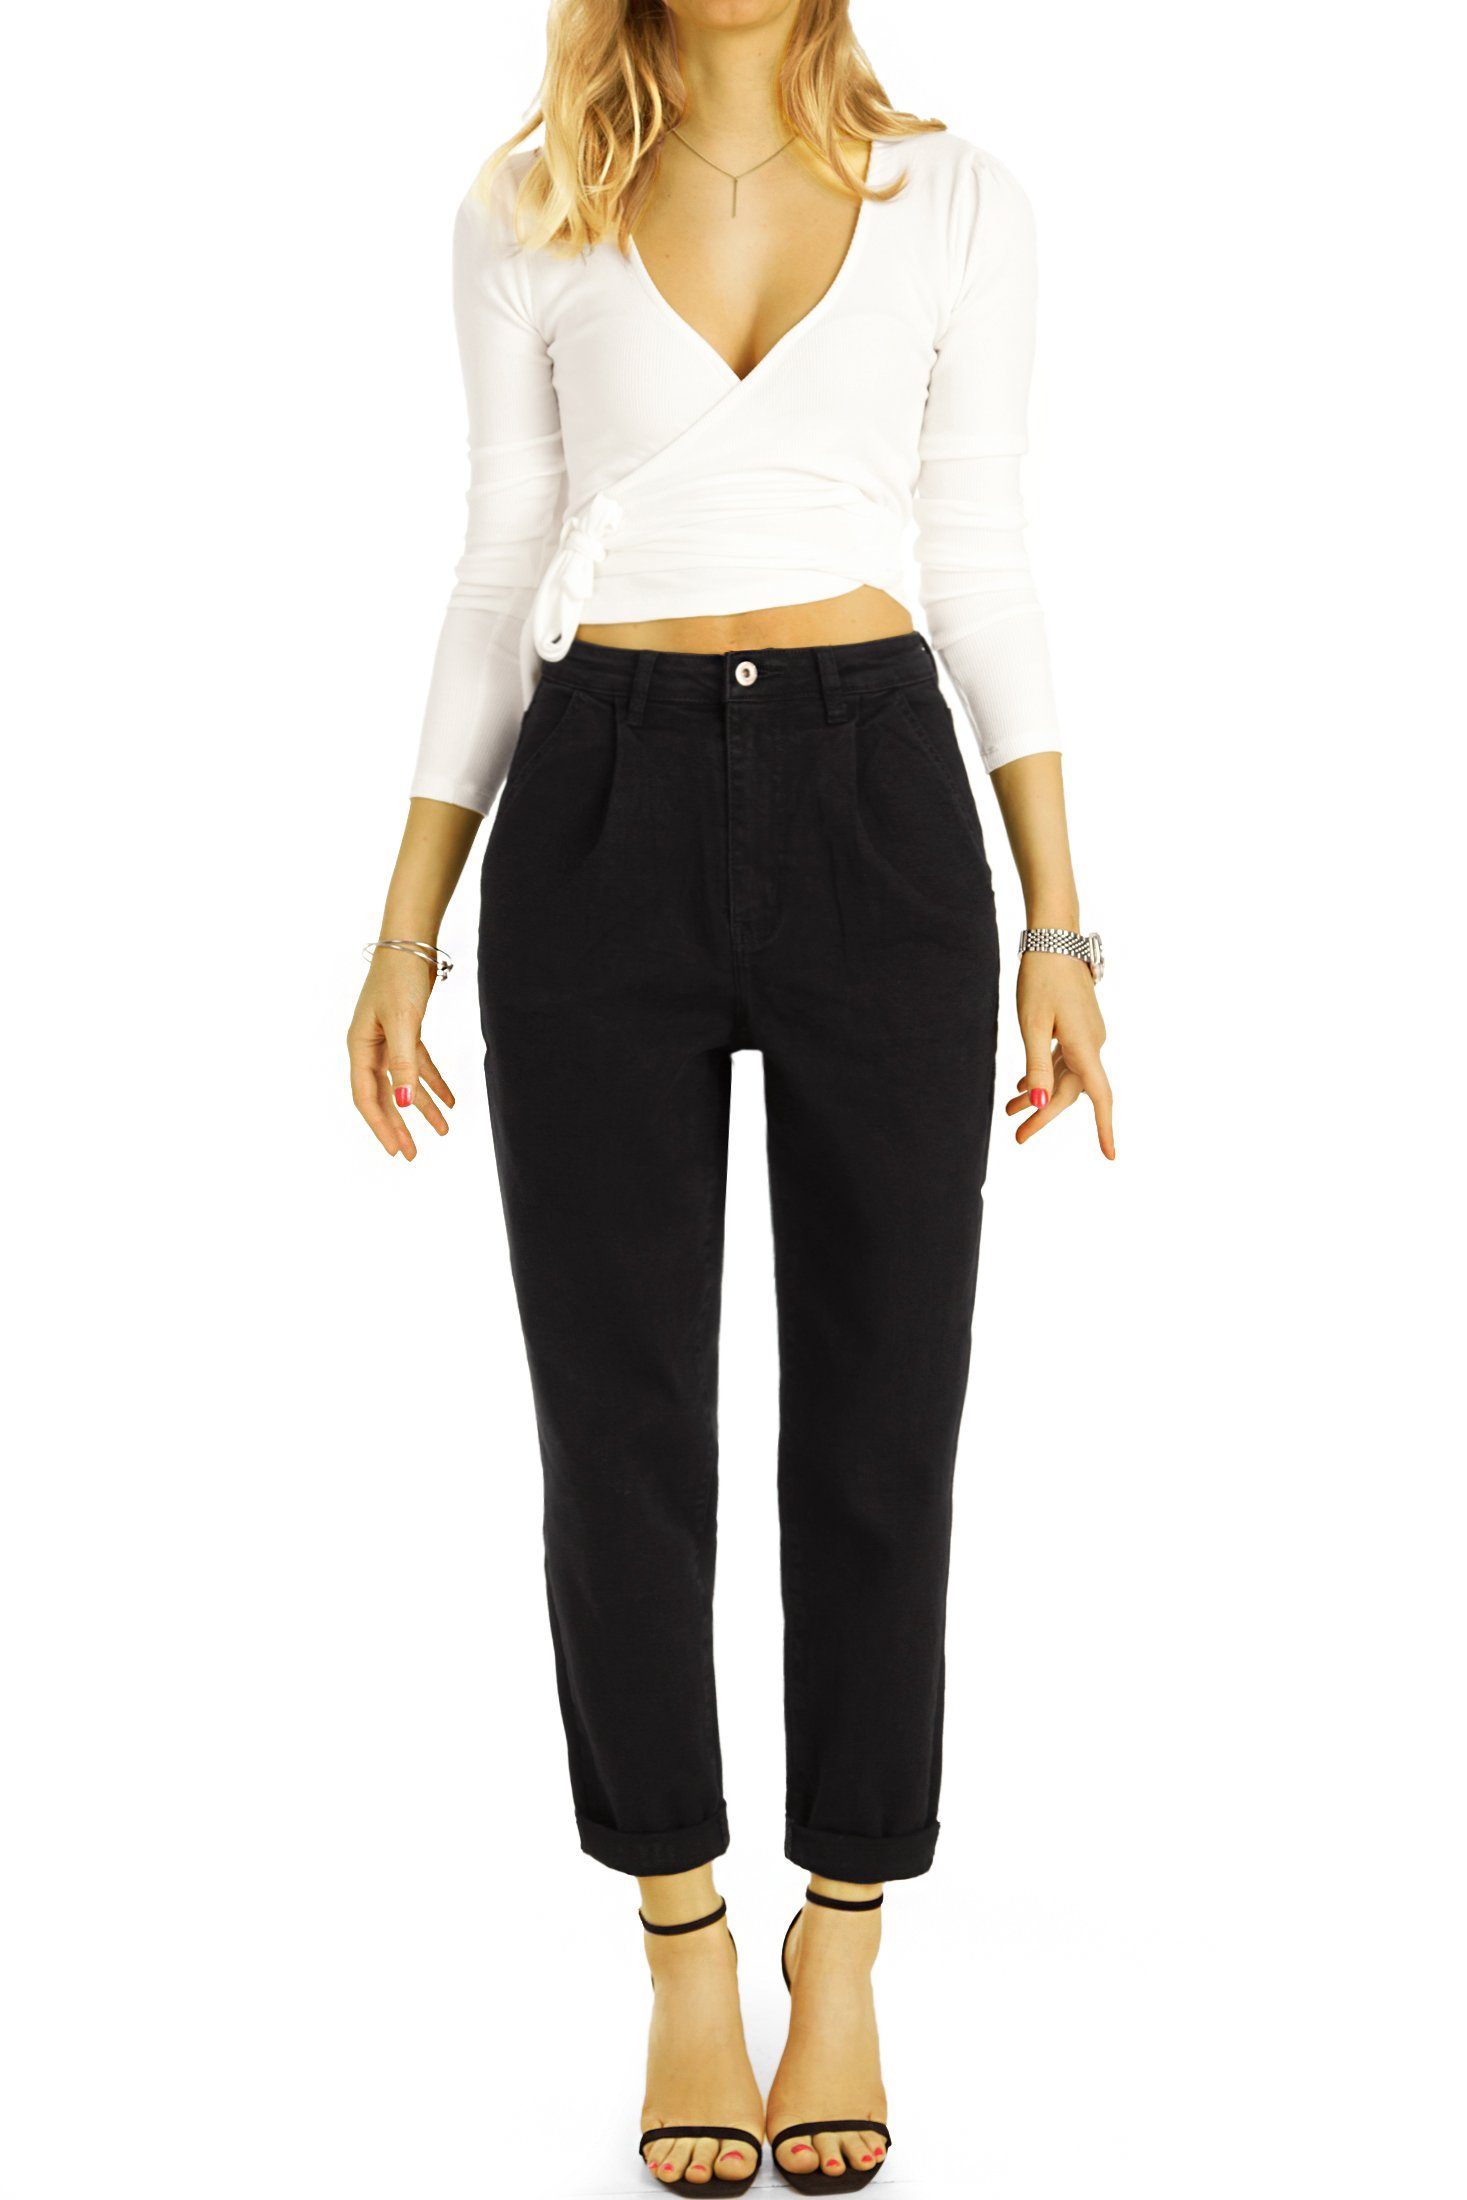 Jeans waist Stretch-Anteil be schwarz High Waist Medium mit Damen Hose j24g-4 5-Pocket-Style, - Mom-Jeans Mom - styled